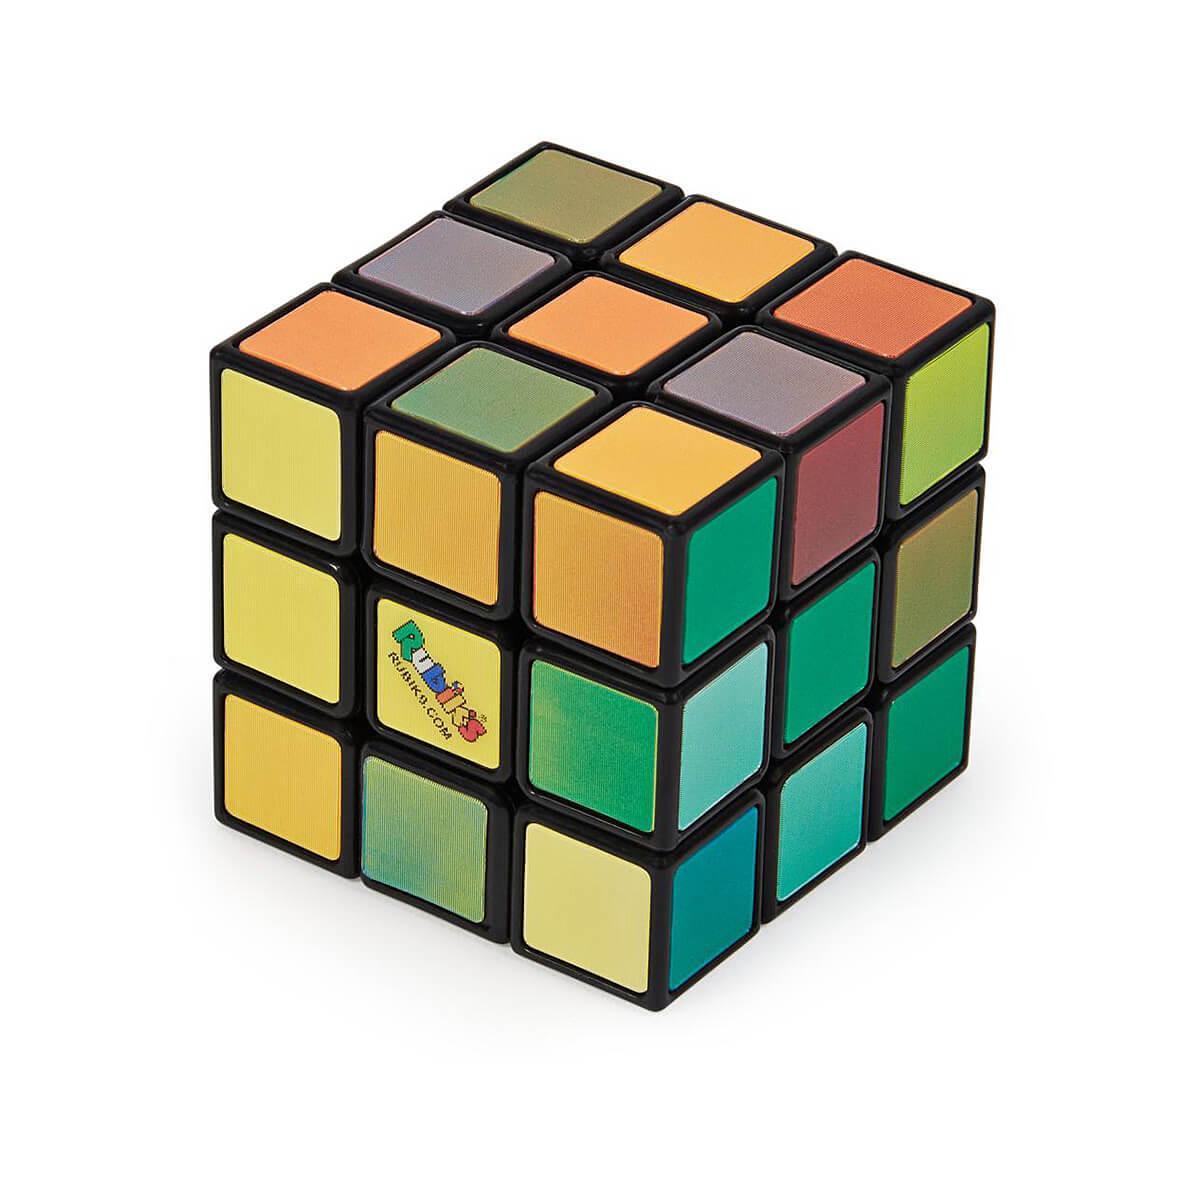 John Adams Rubik's Speed Cube Toys